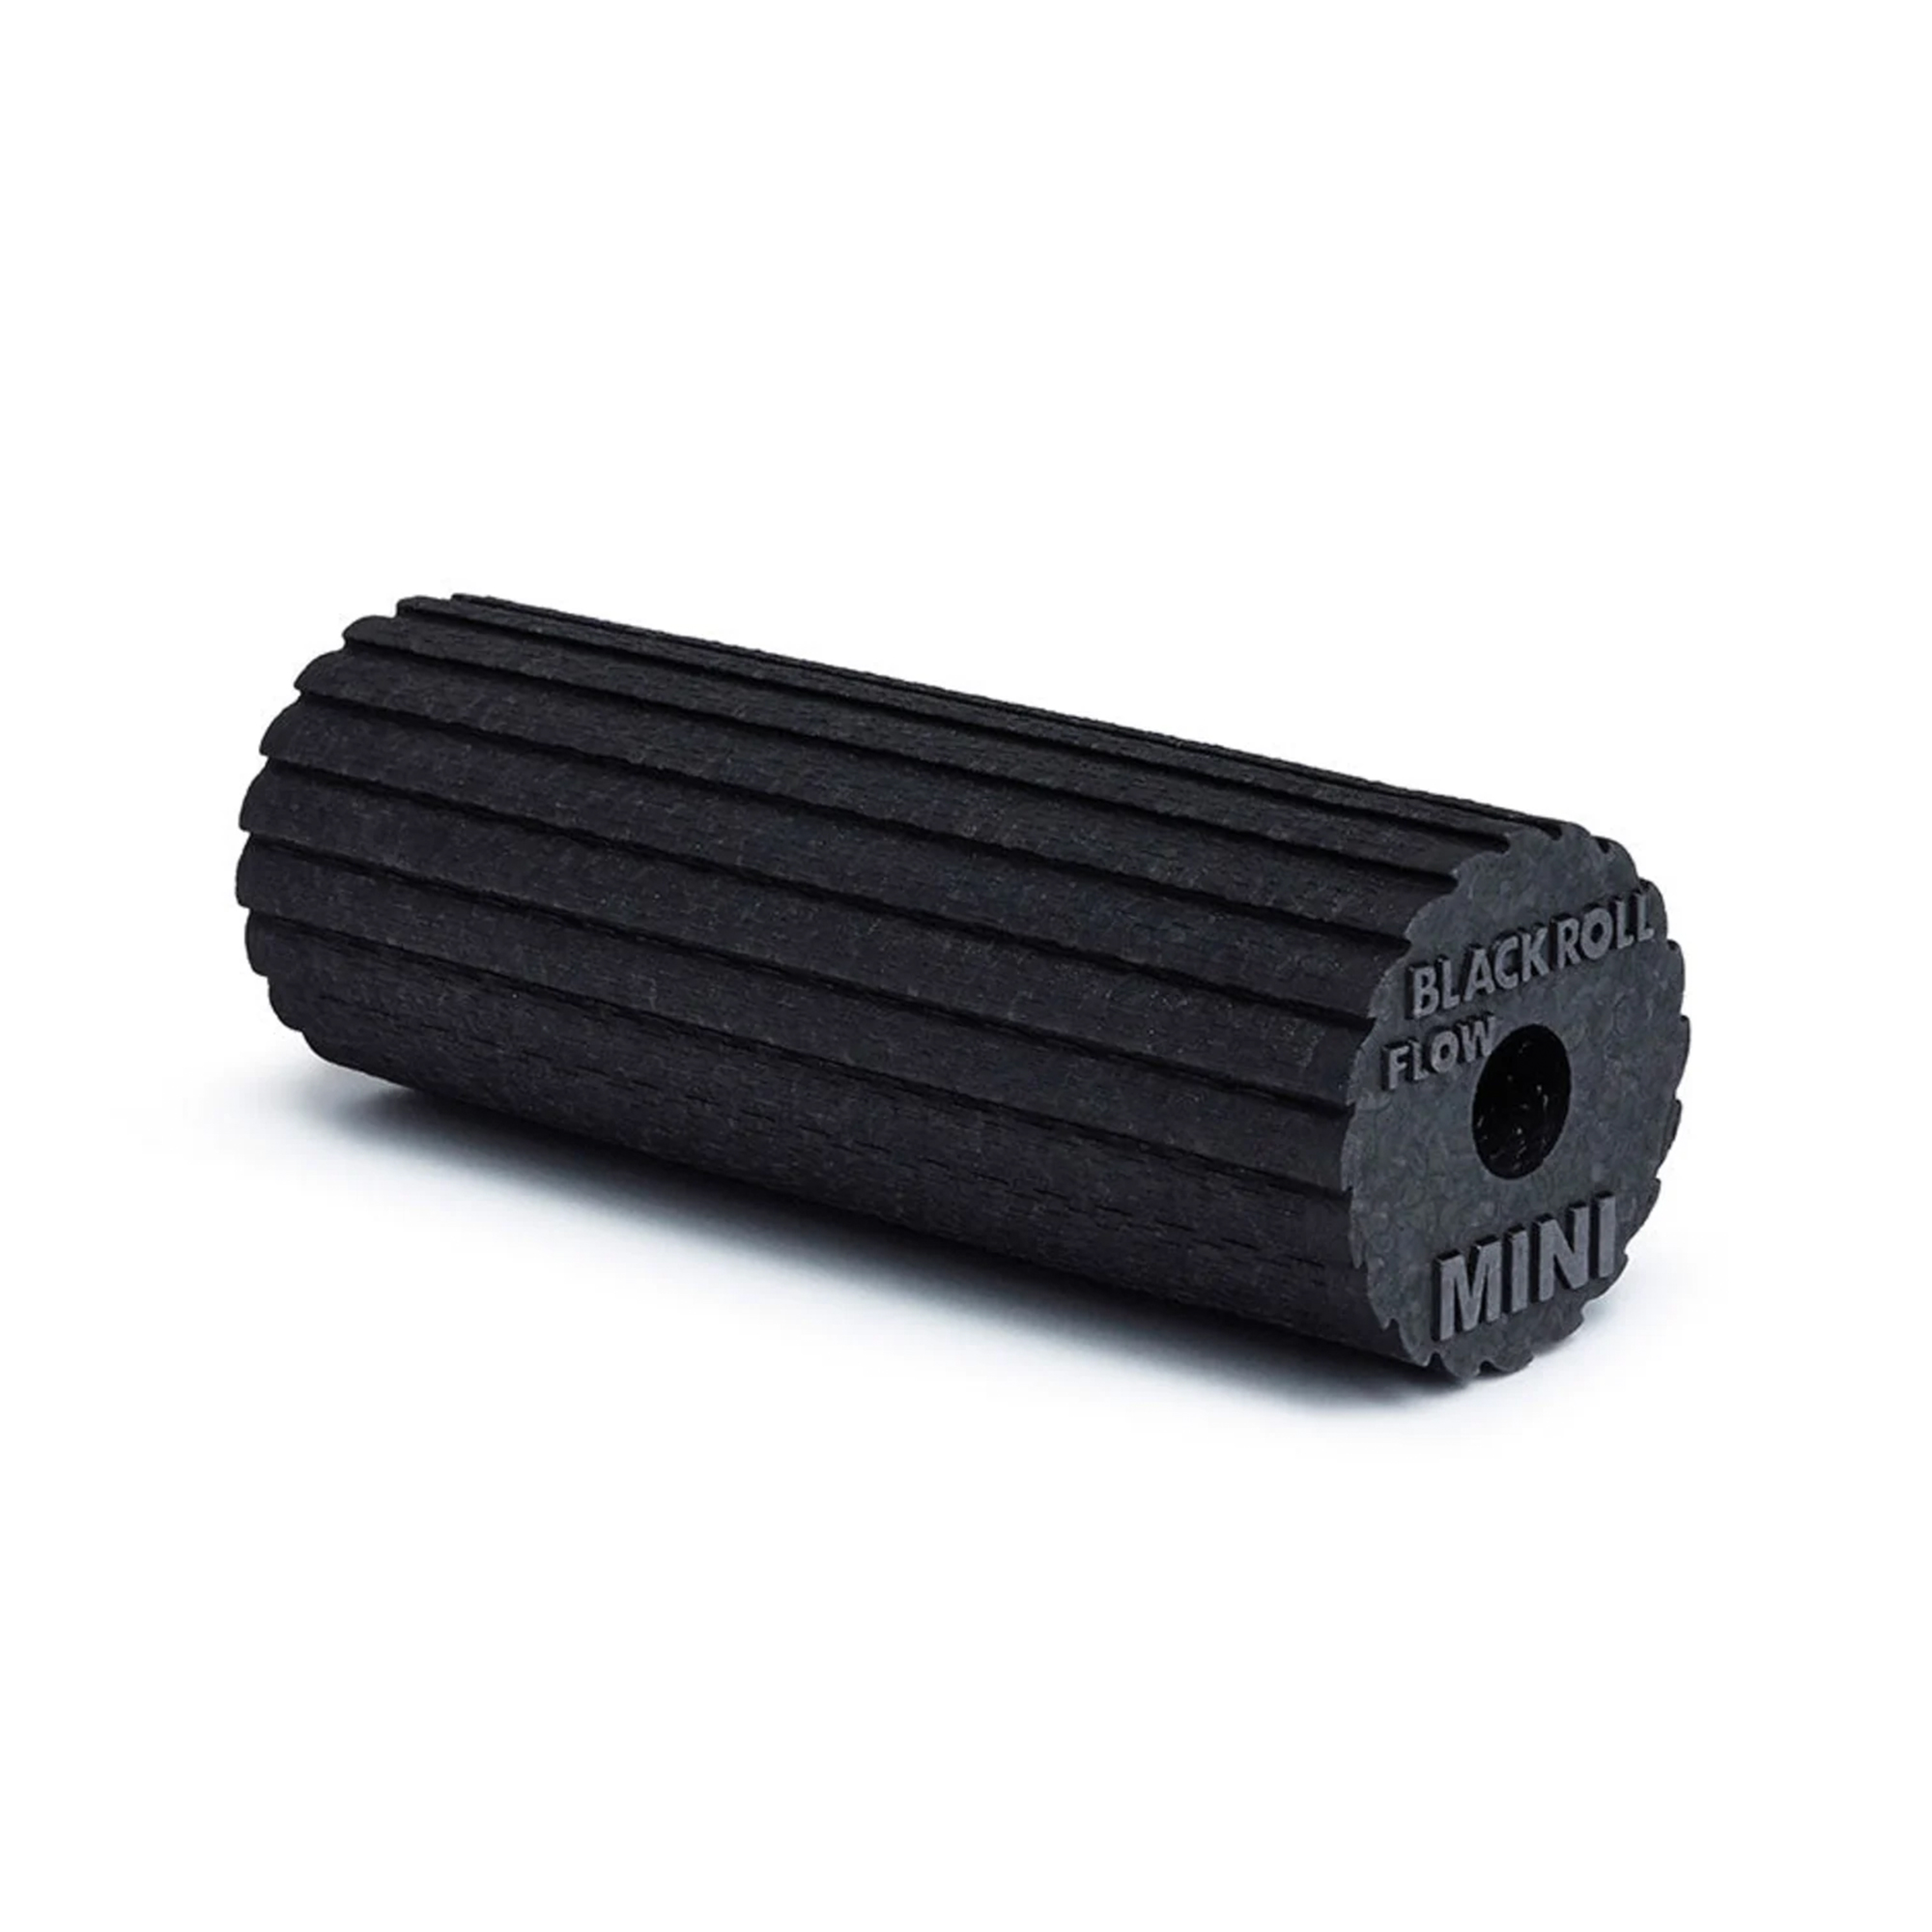 Blackroll Mini Flow Foam Roller - Sort (15 cm x 6 cm) thumbnail